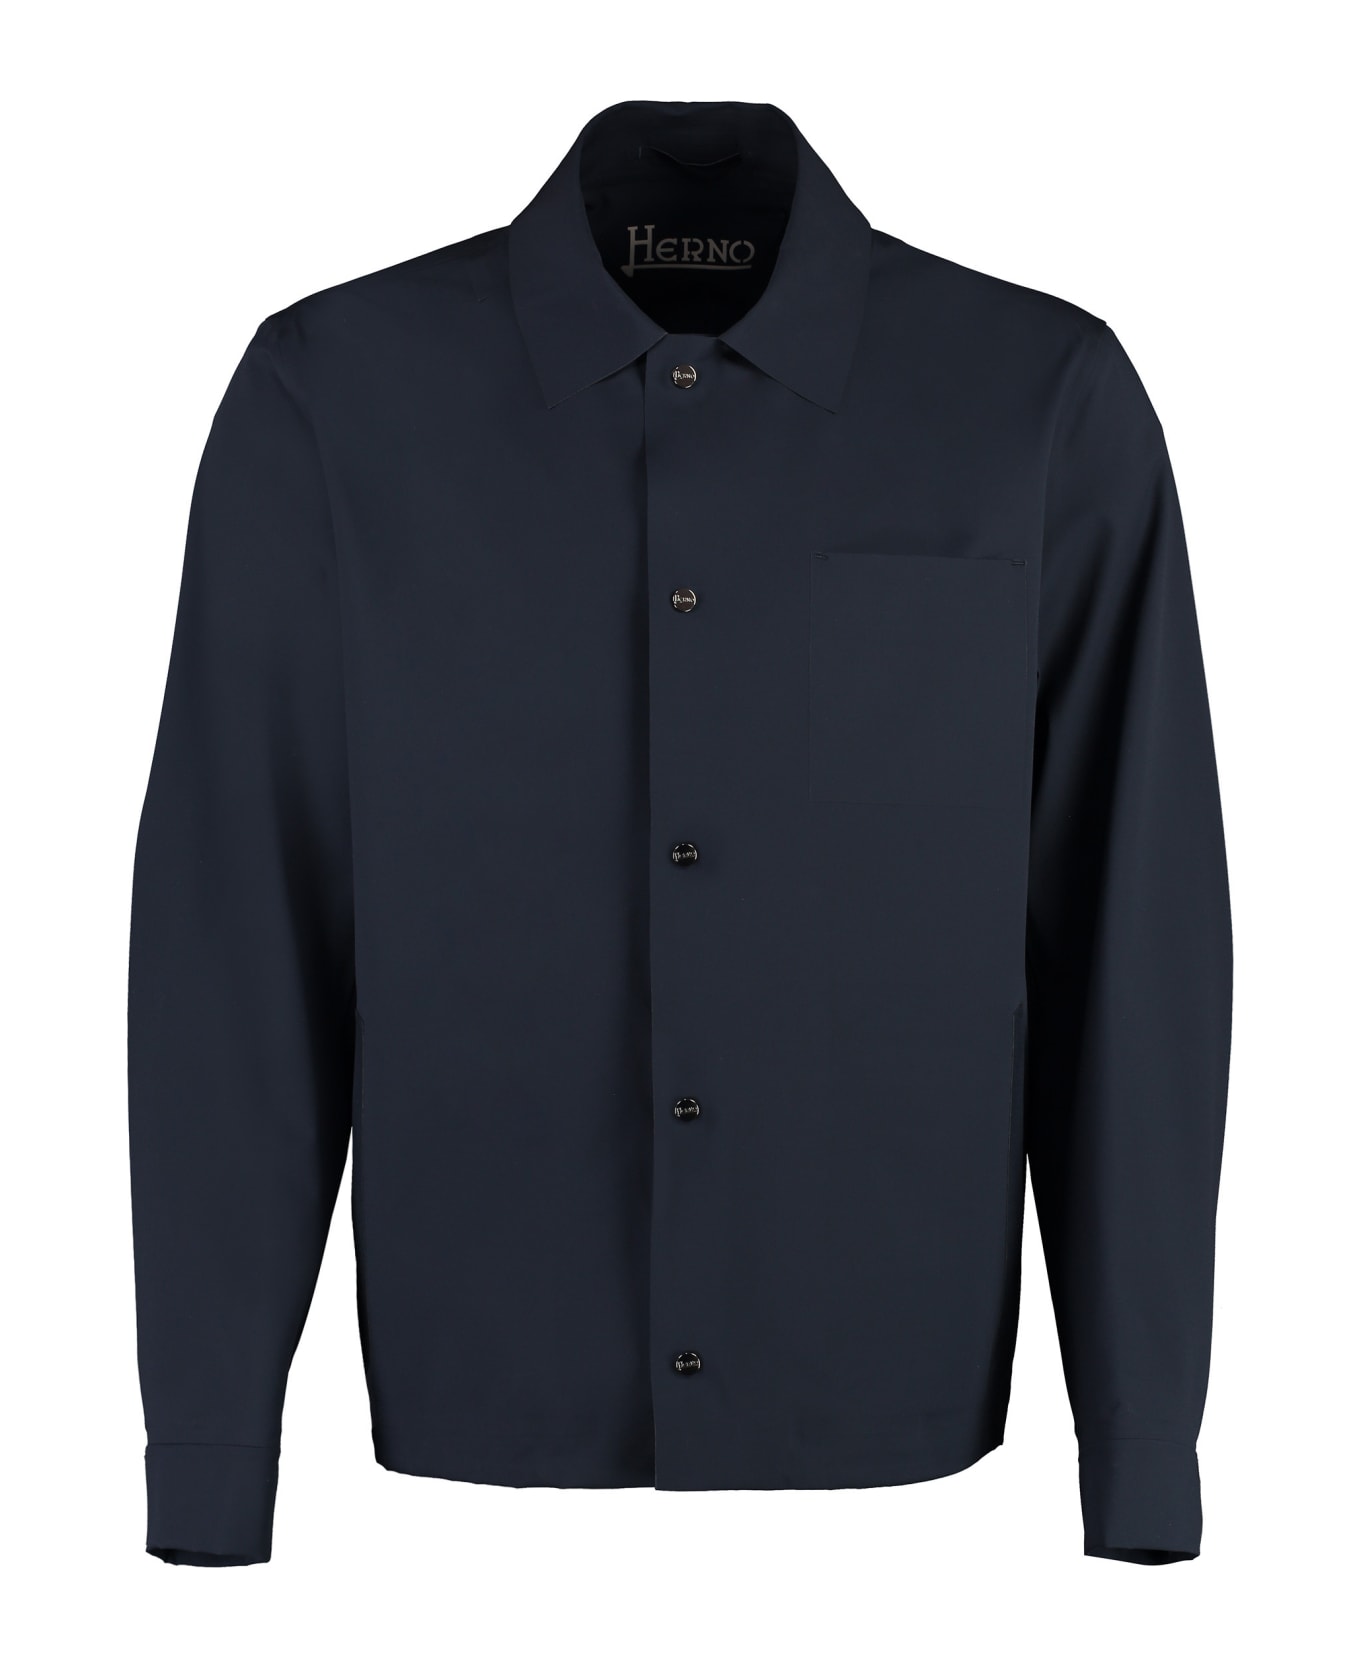 Herno Technical Fabric Overshirt - blue